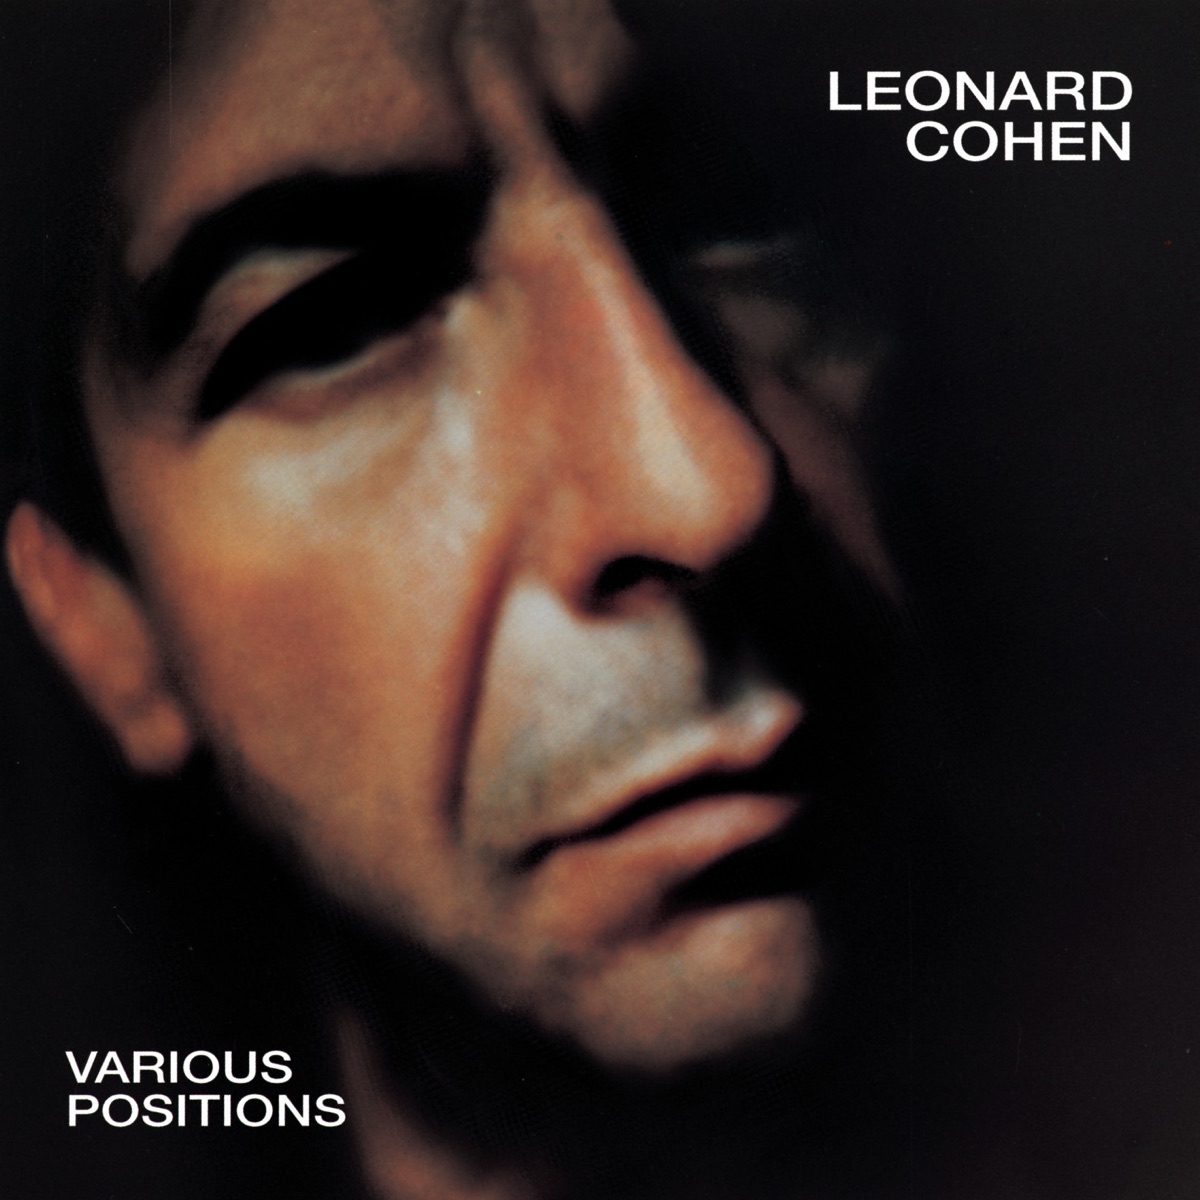 Ten New Songs - Album by Leonard Cohen - Apple Music